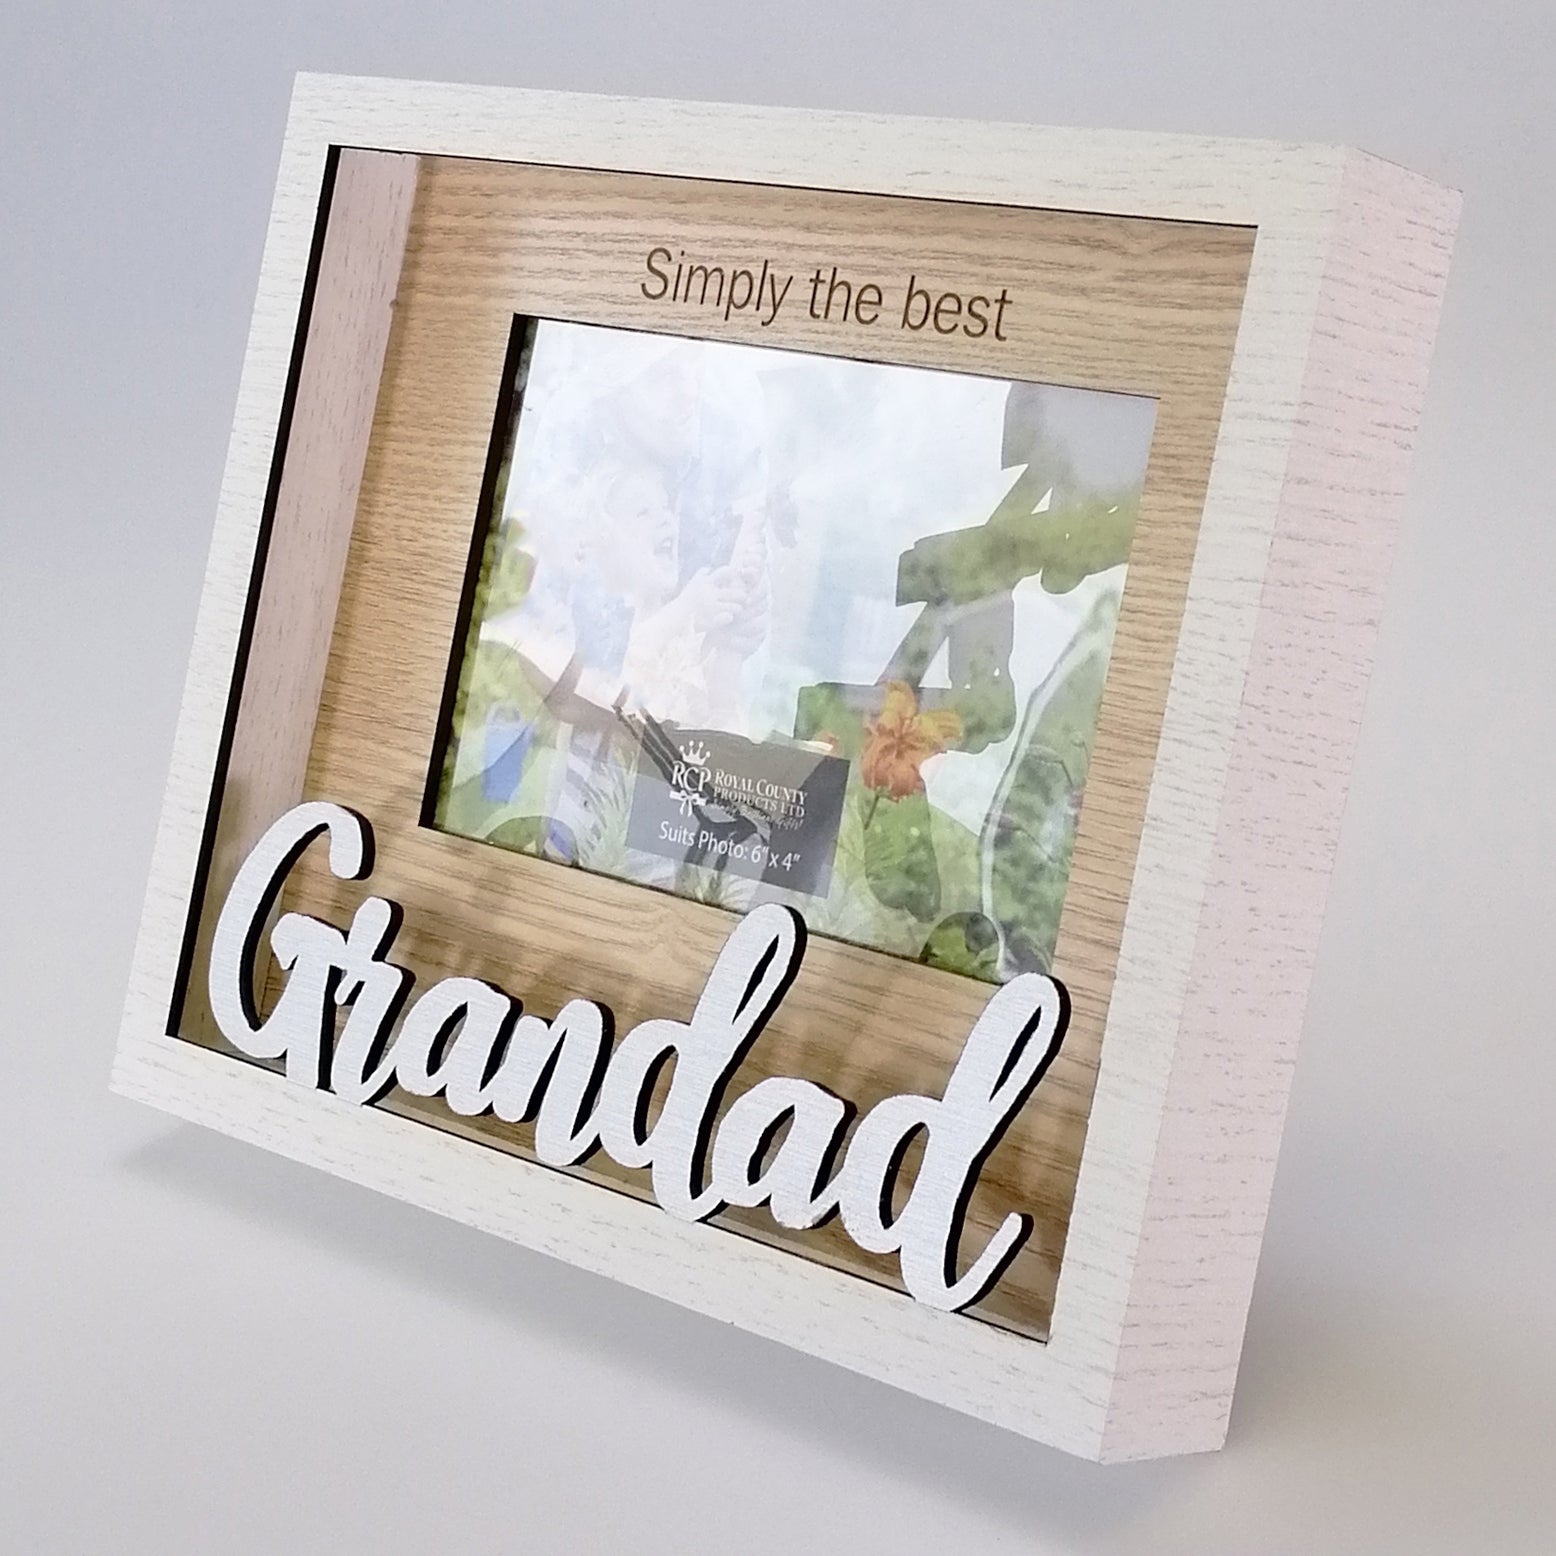 Simply the Best Frame 4"x 6" - Grandad